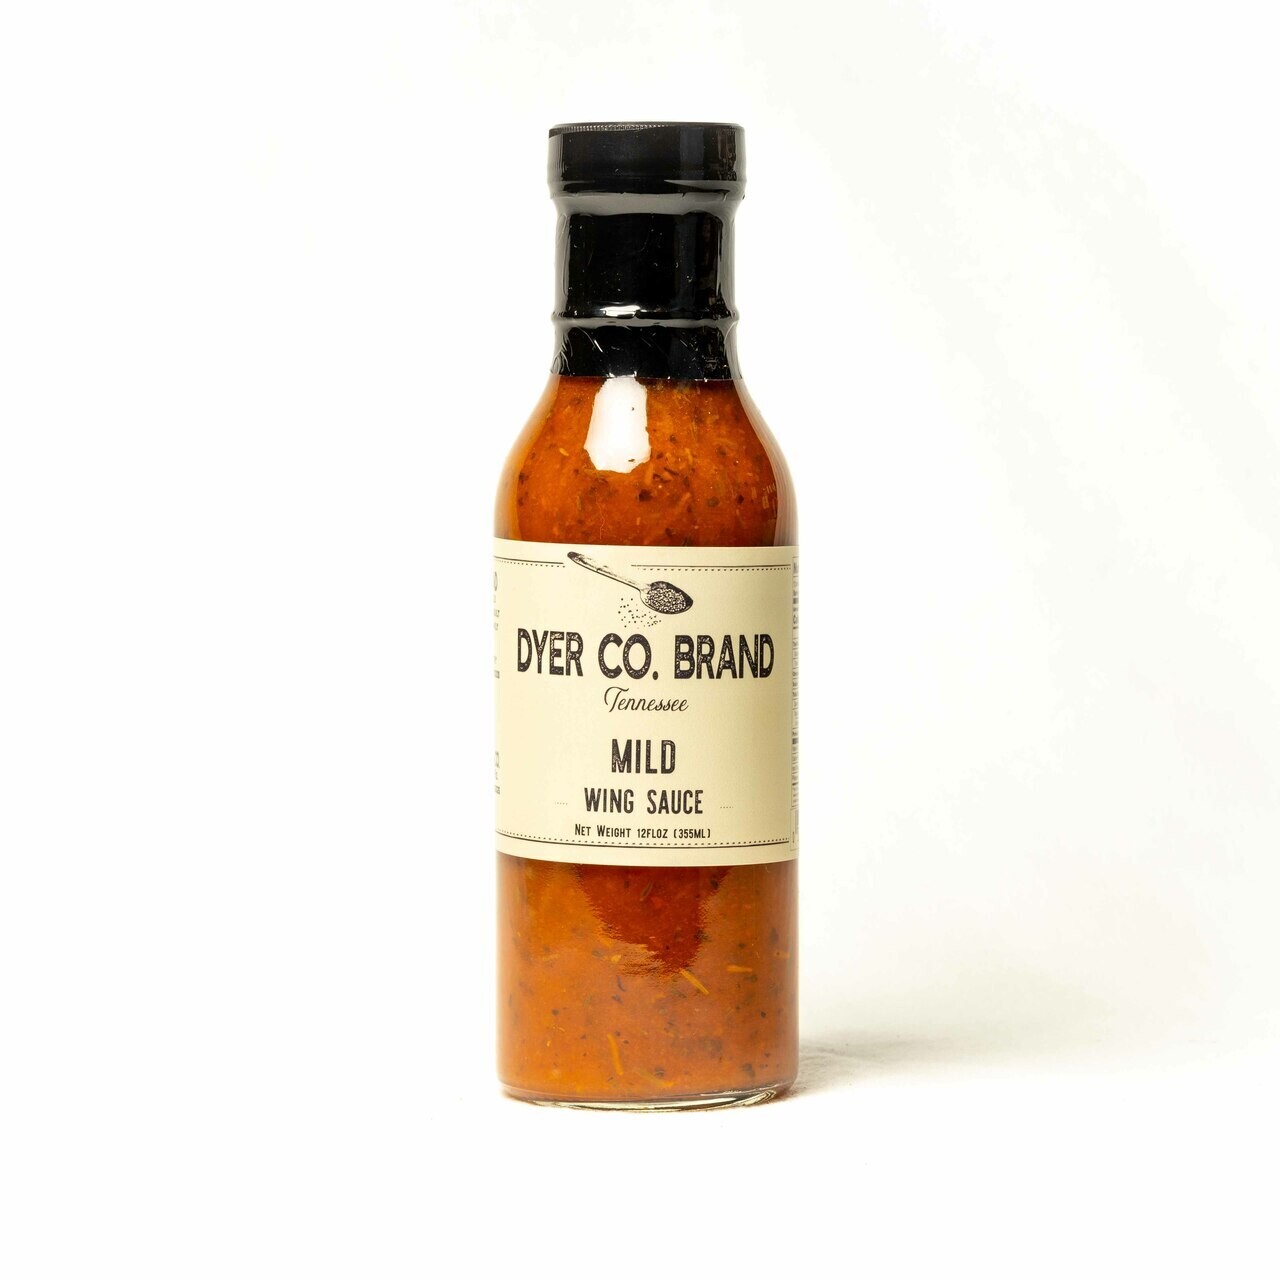 Dyer Co Brand Mild Wing Sauce